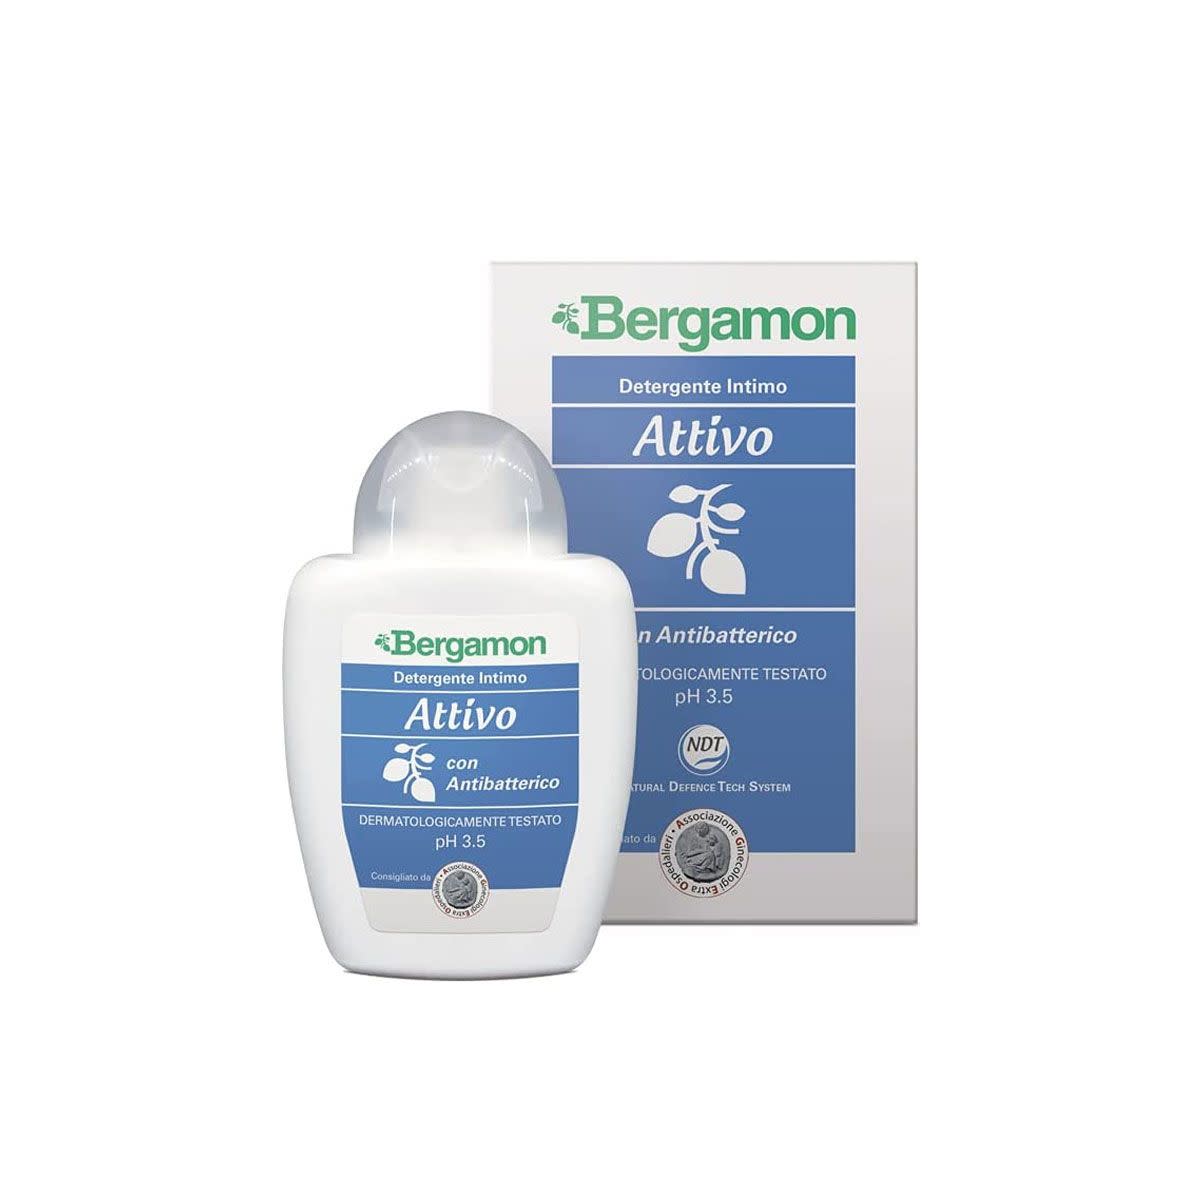 975521016 - Bergamon Detergente Intimo Attivo 200ml - 4732516_1.jpg